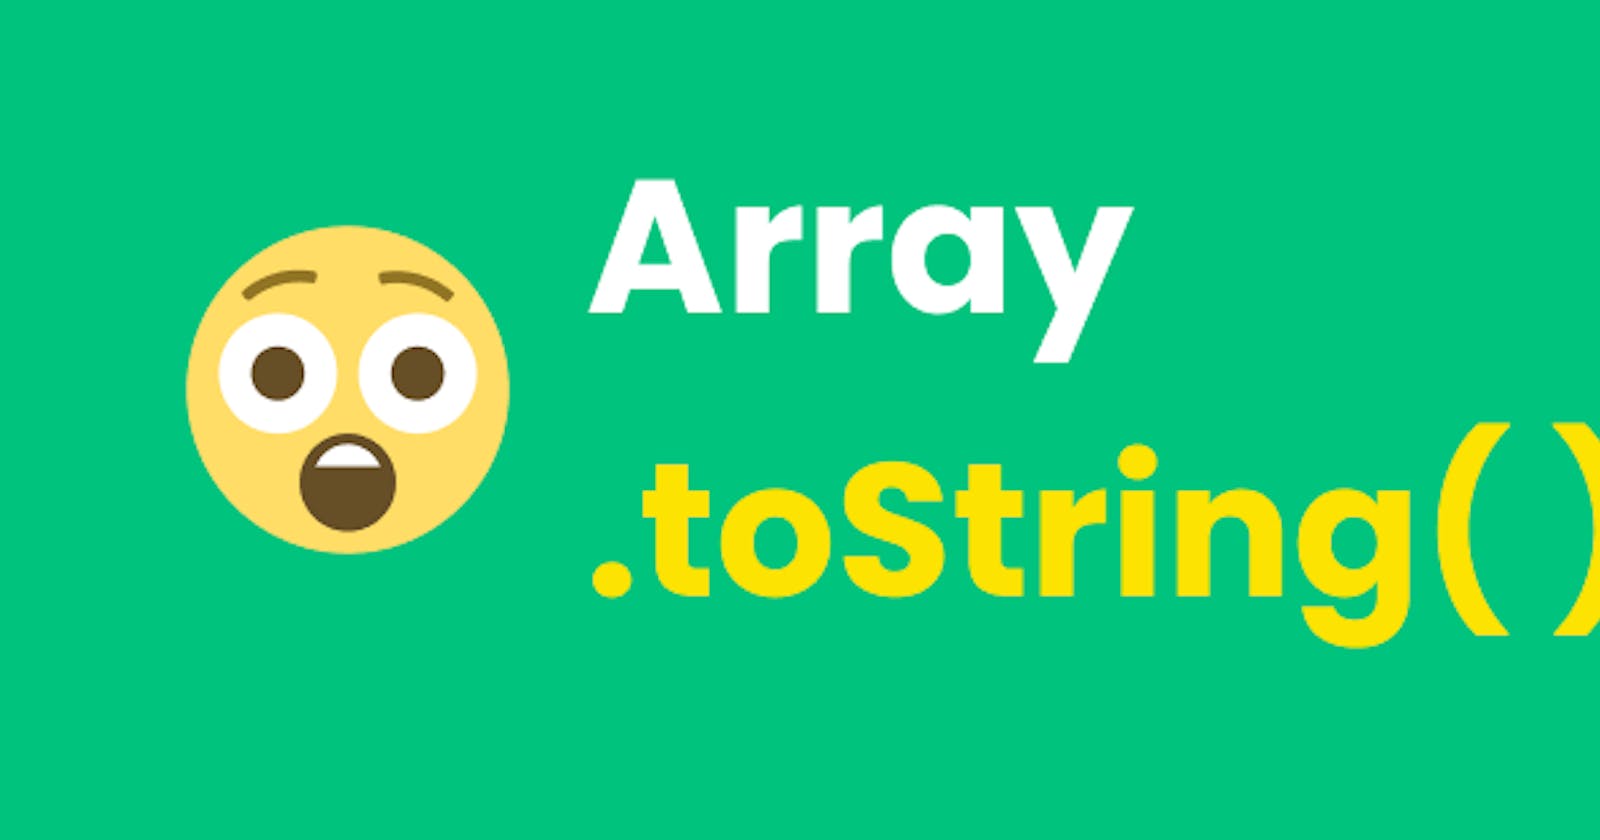 Convertir un Array a String en JavaScript